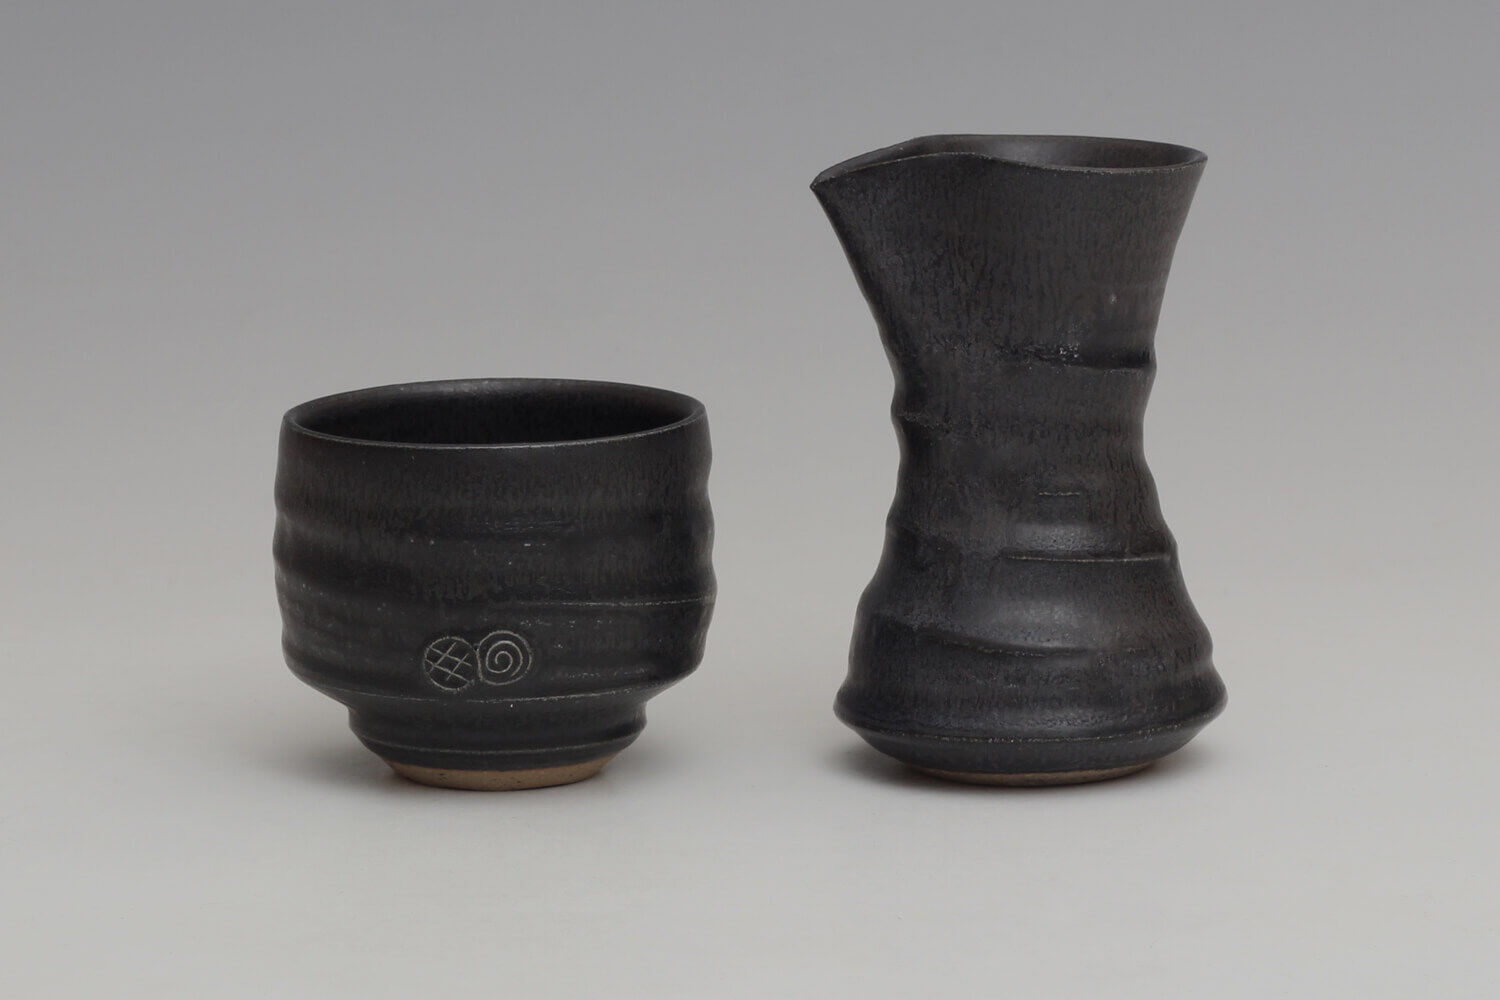 Gilles Le Corre Ceramic Cup and pourer set